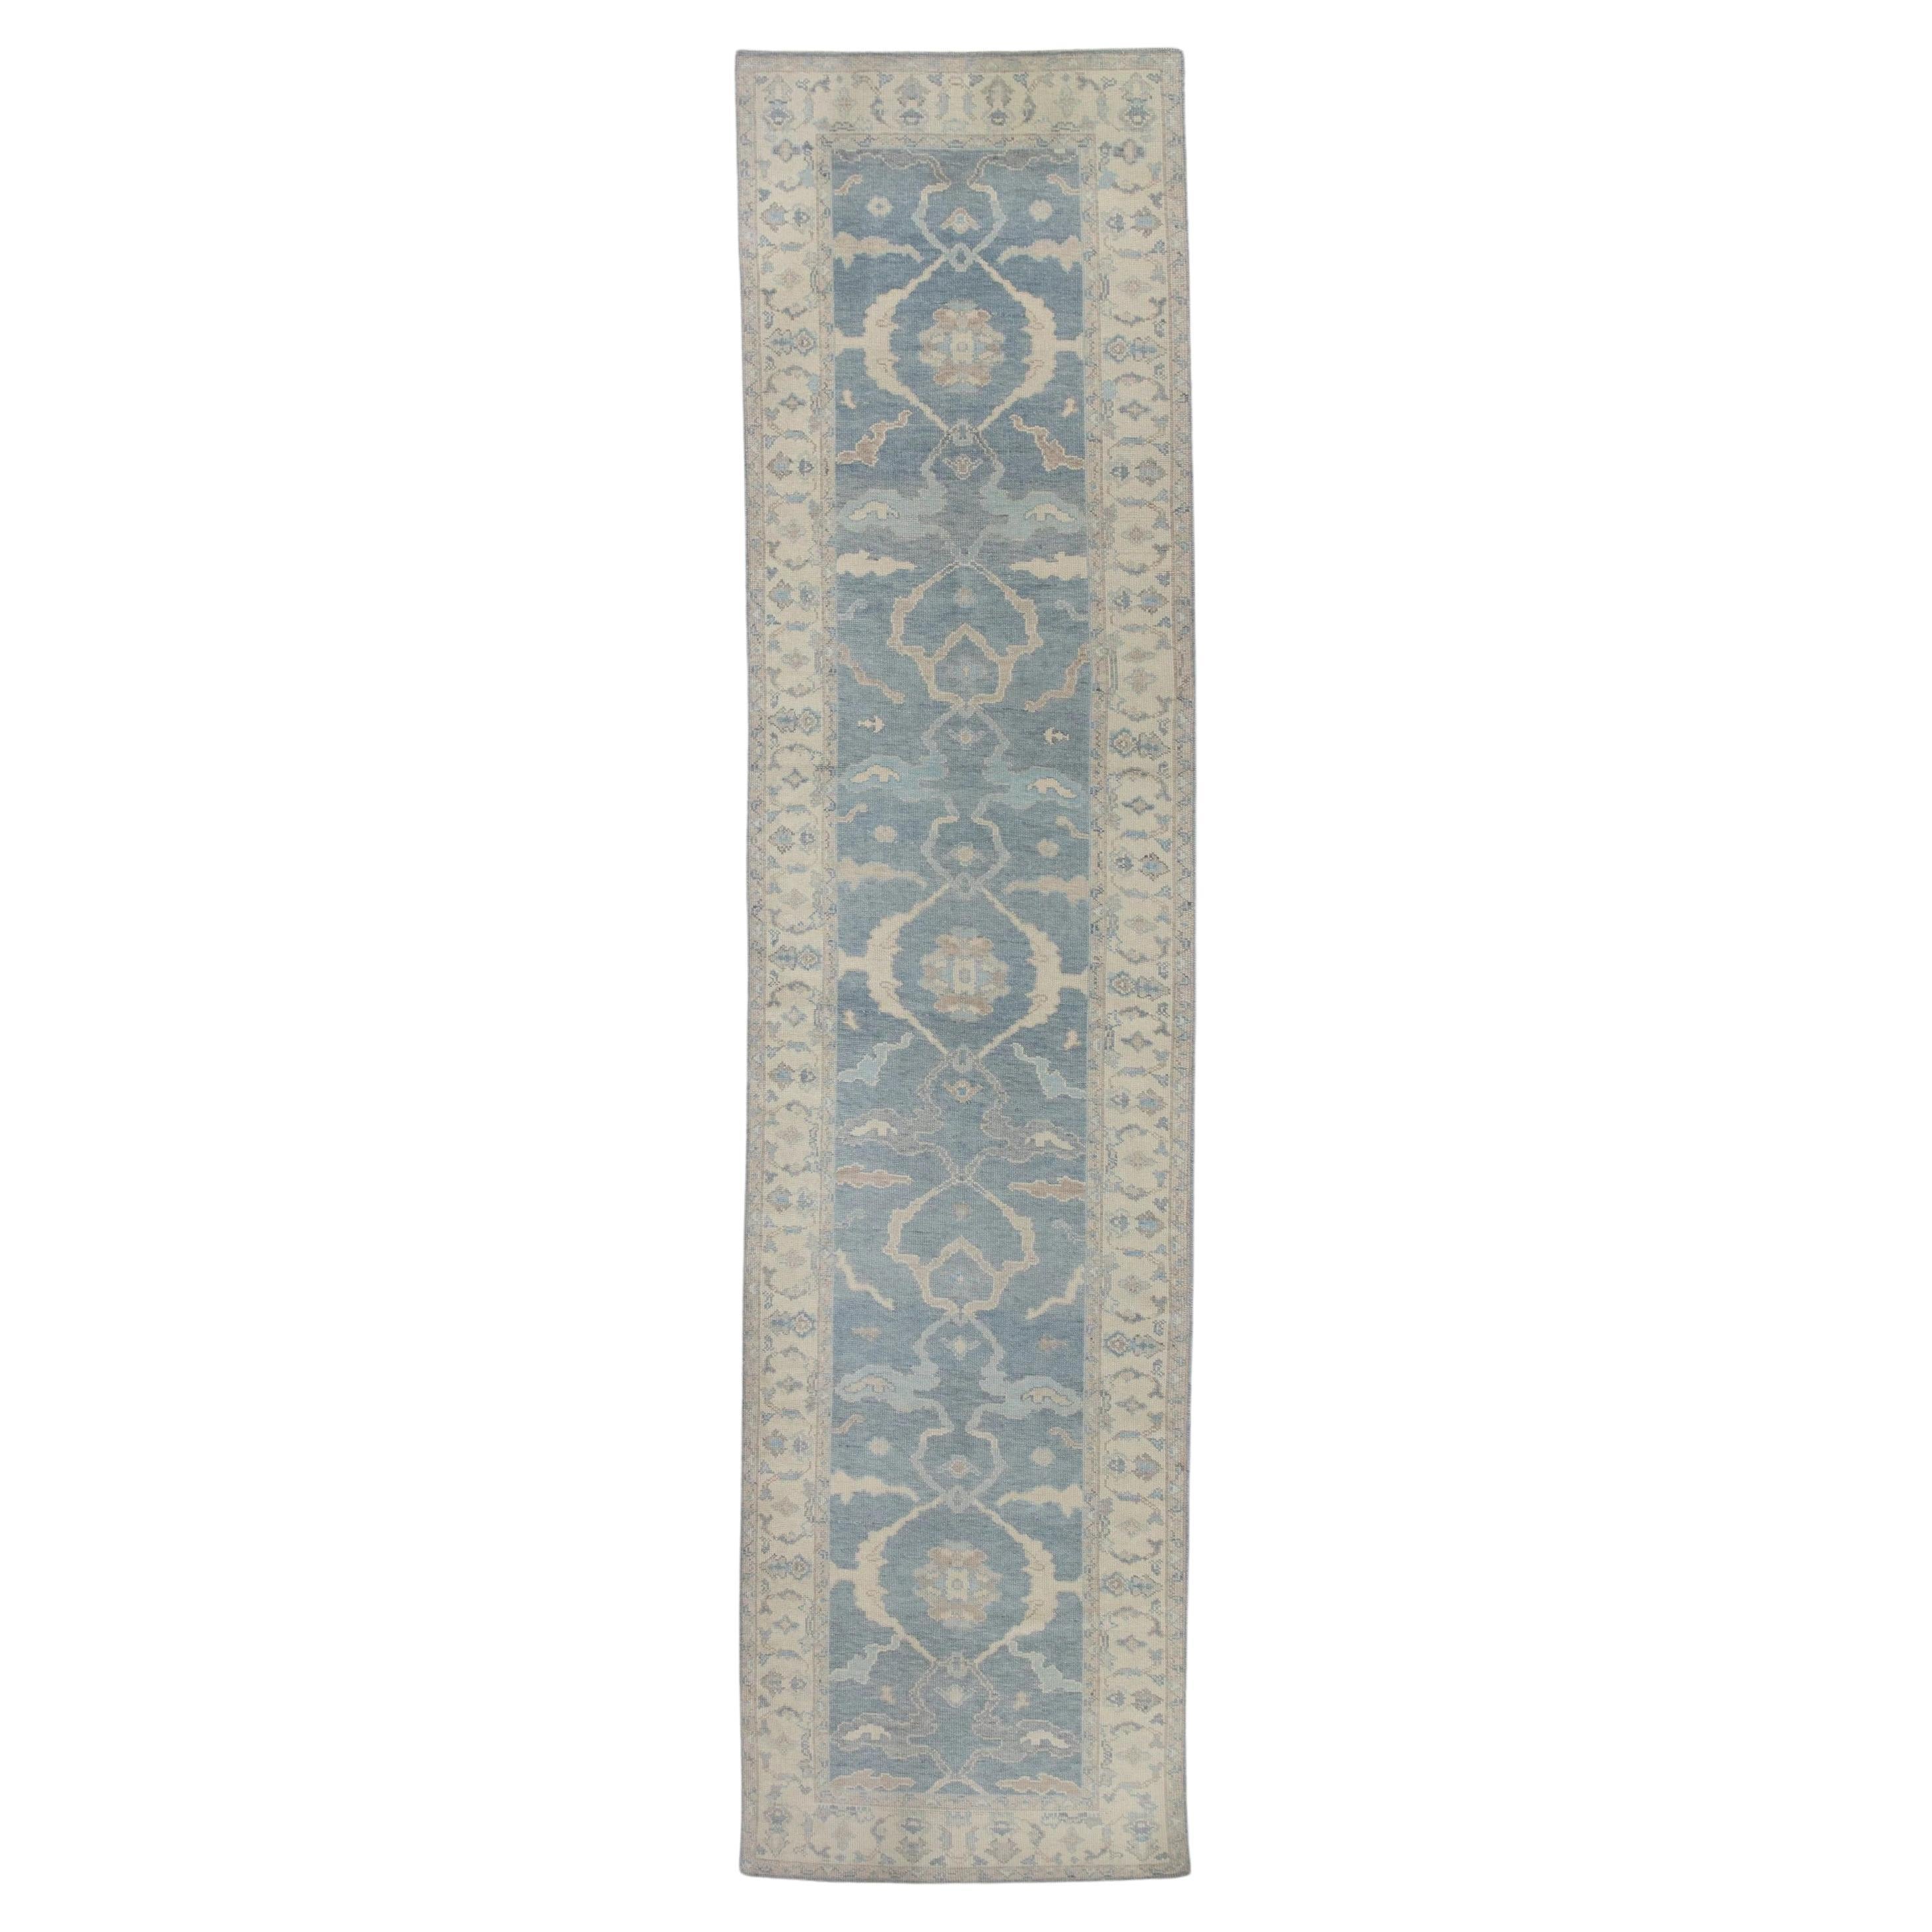 Blue Floral Pattern Handwoven Wool Turkish Oushak Runner 3'10" X 16'1"